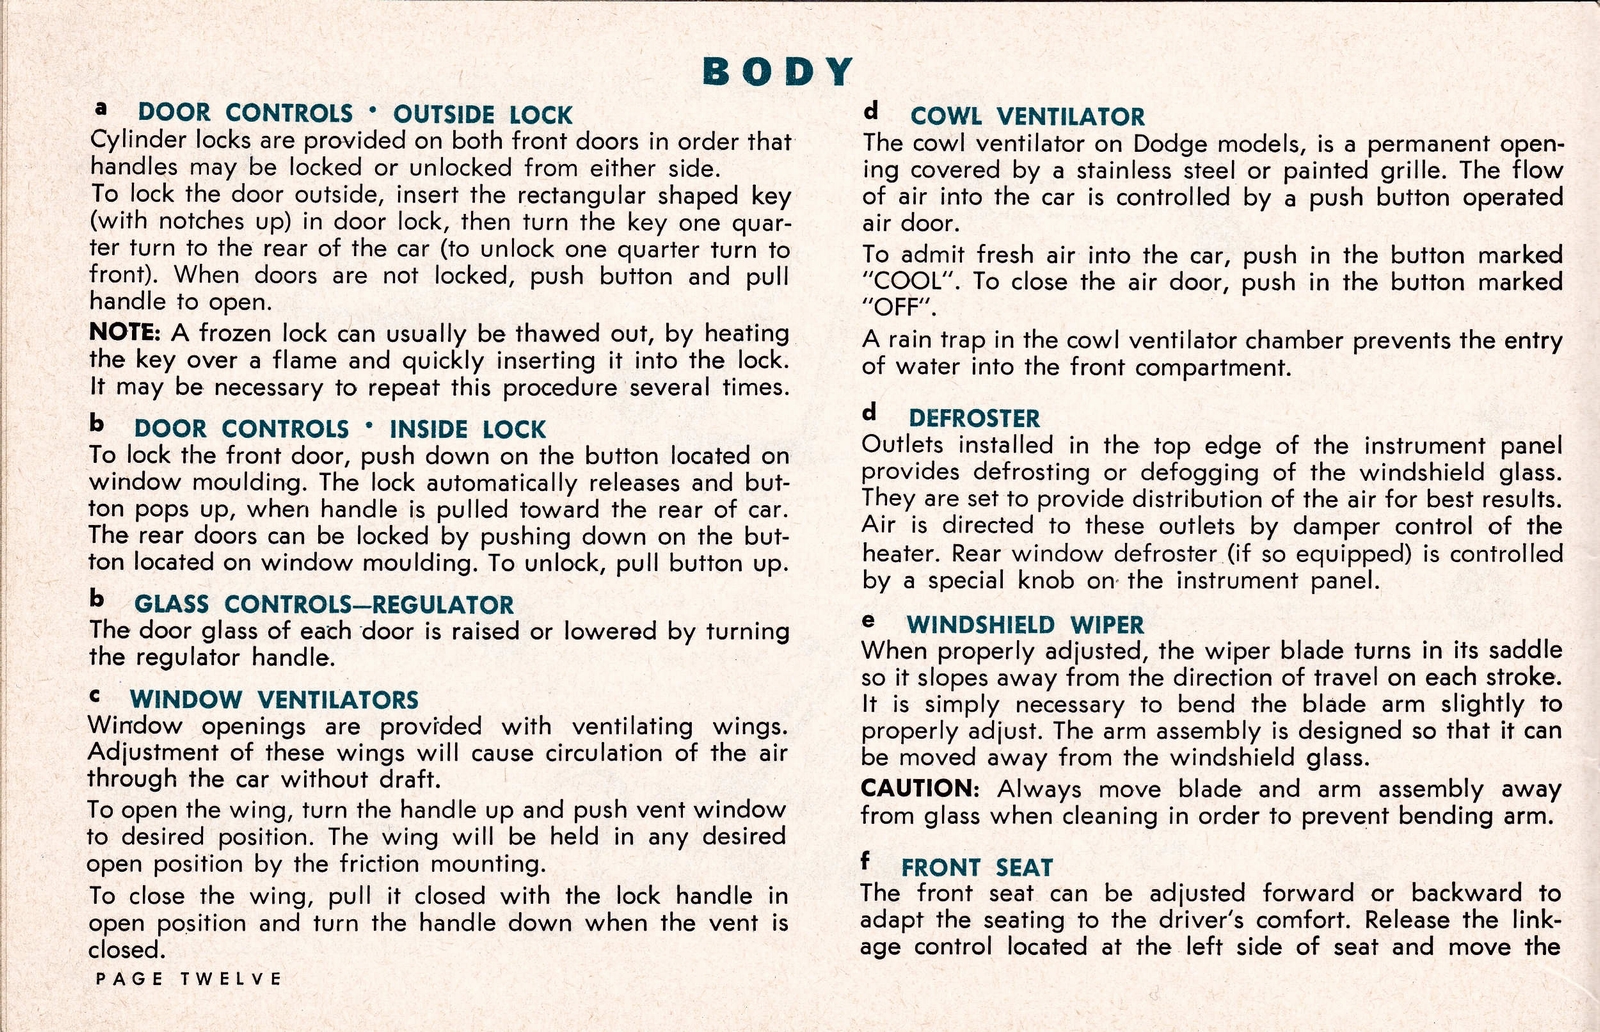 n_1964 Dodge Owners Manual (Cdn)-12.jpg